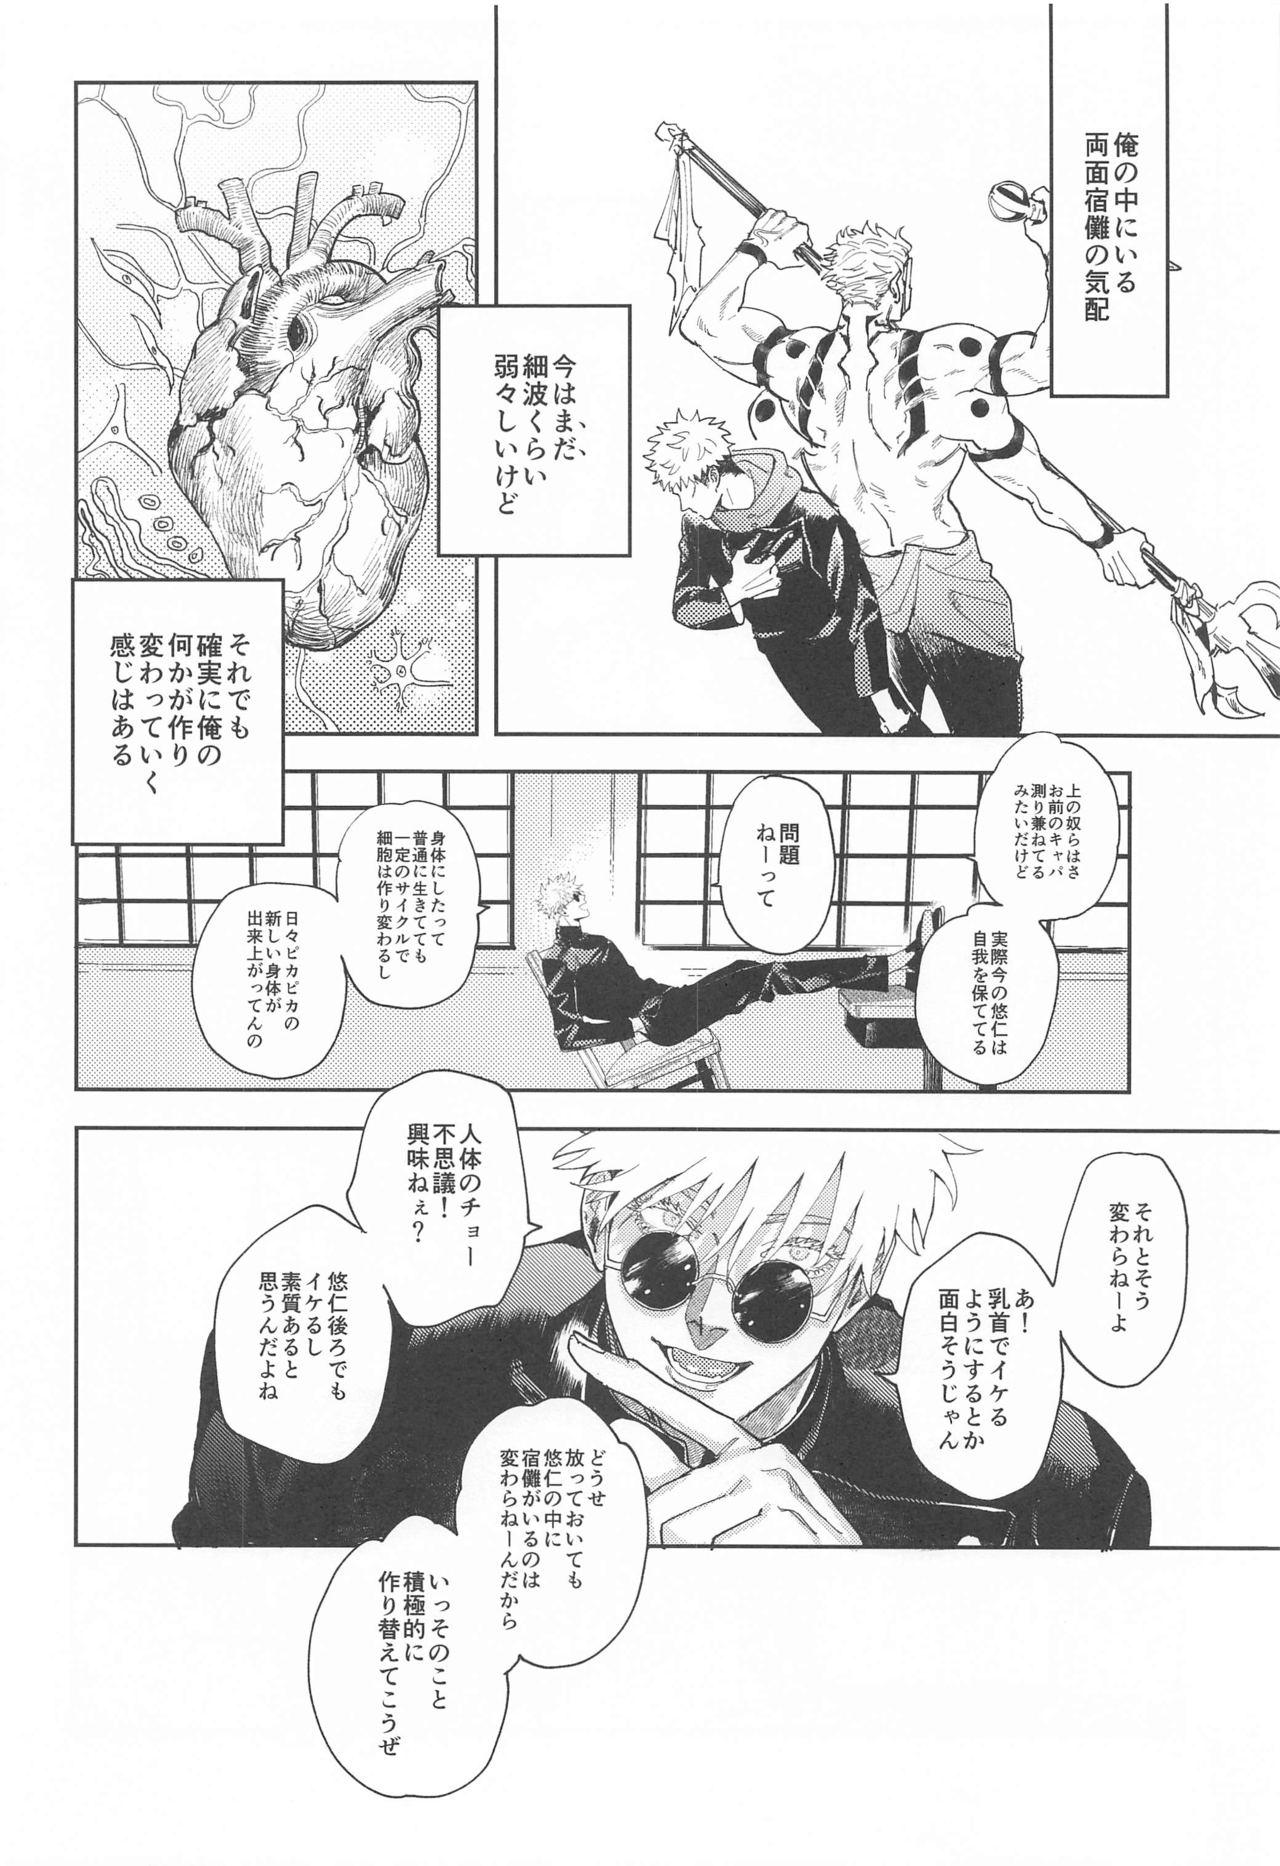 Kink soregaaittemondaro - Jujutsu kaisen Goth - Page 3